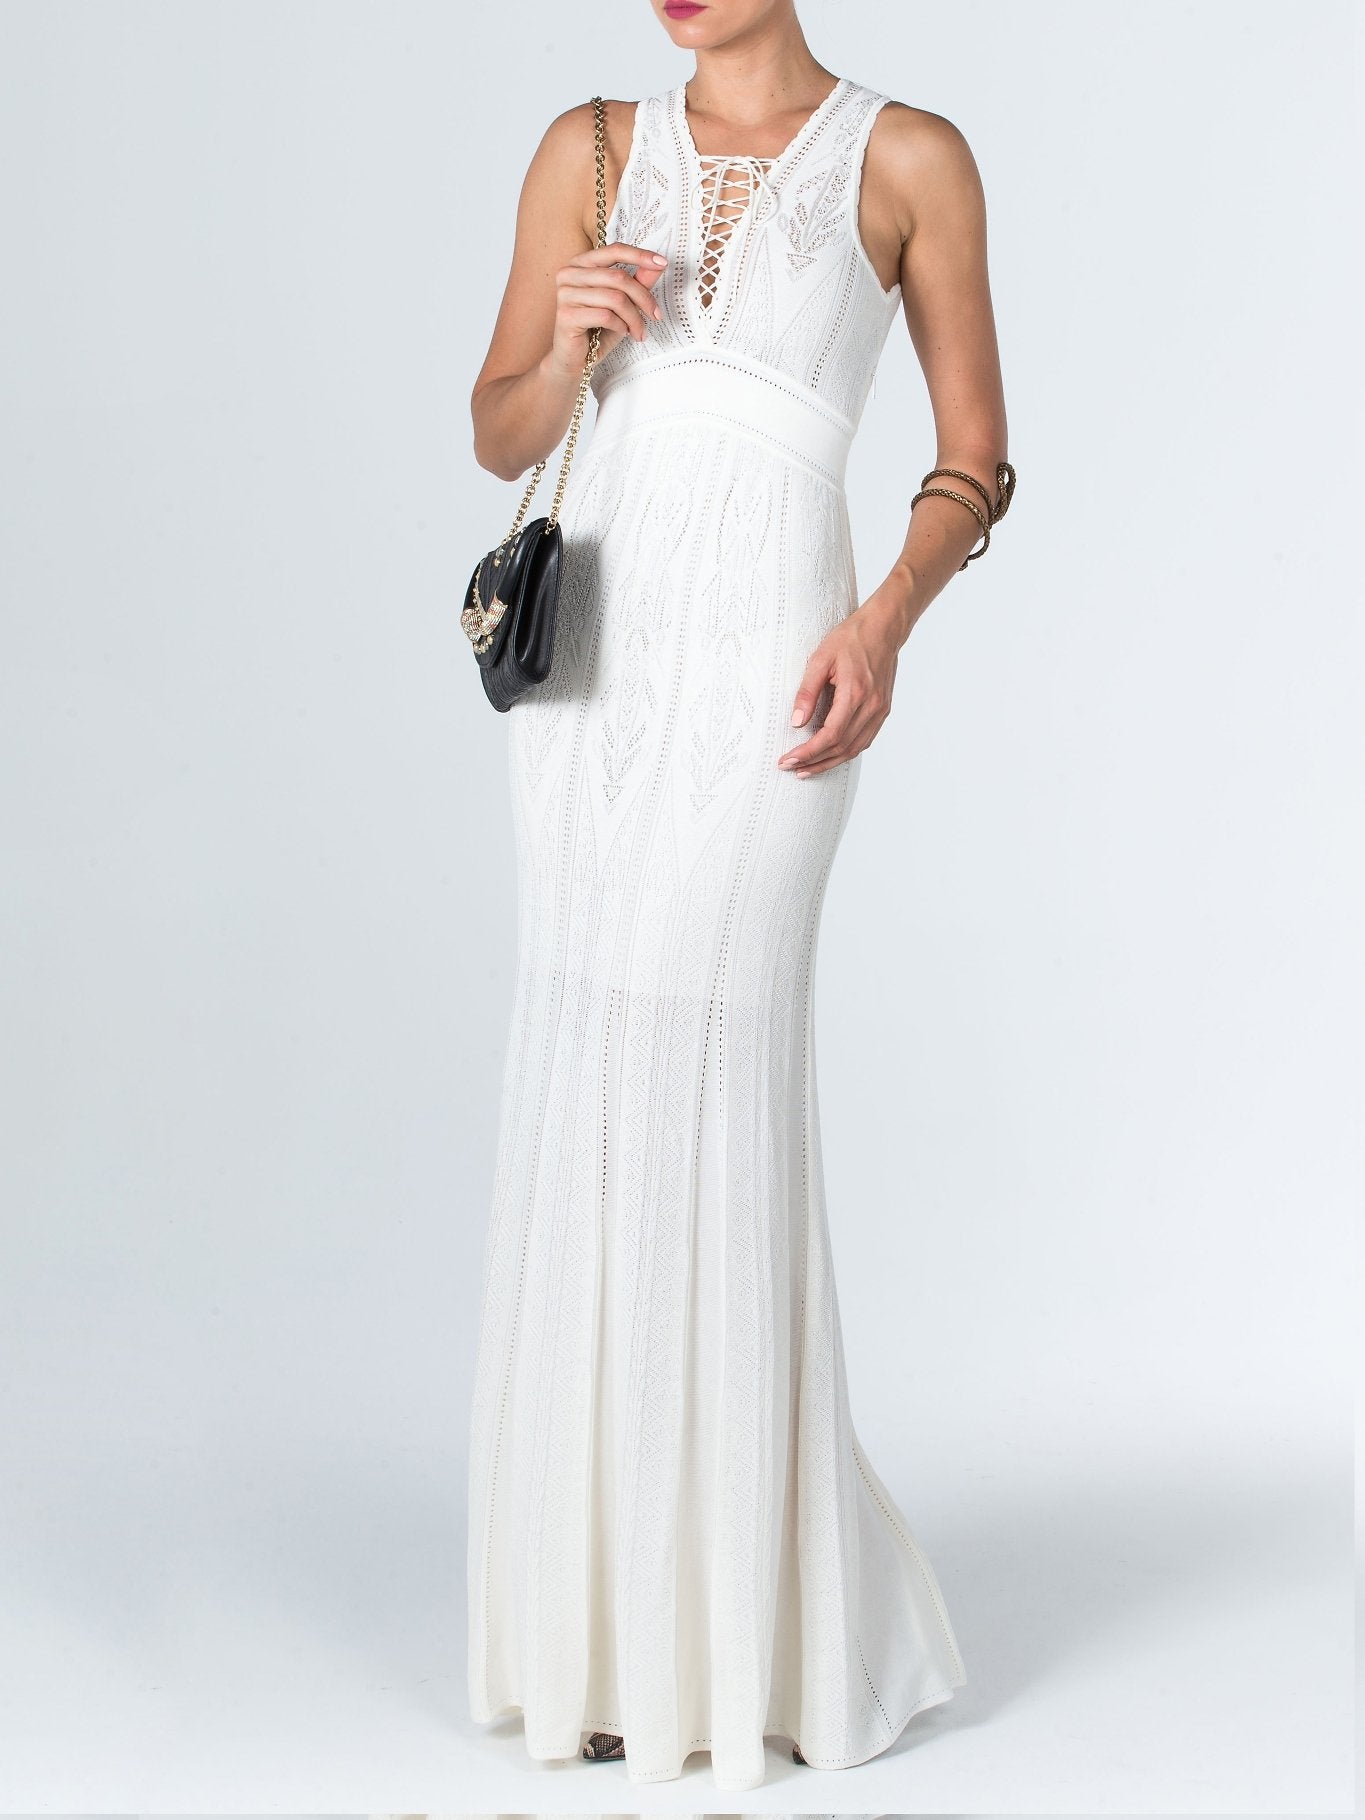 White Lace Empire Sheath Dress